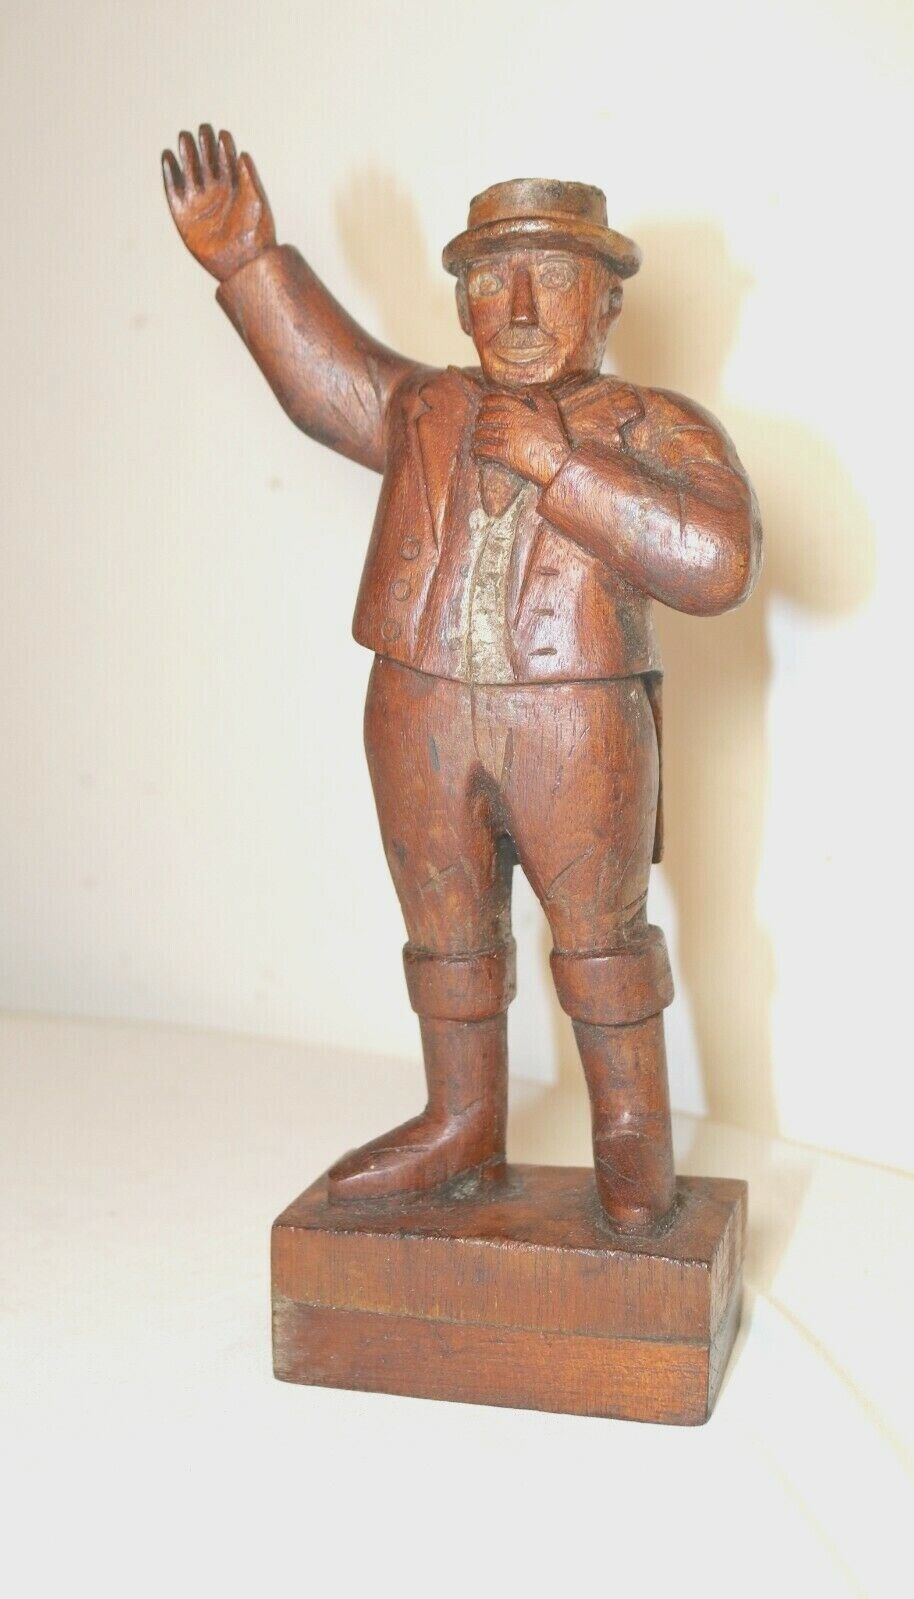 antique 1871 Folk Art hand carved wood figural man sculpture statue figure 19thc